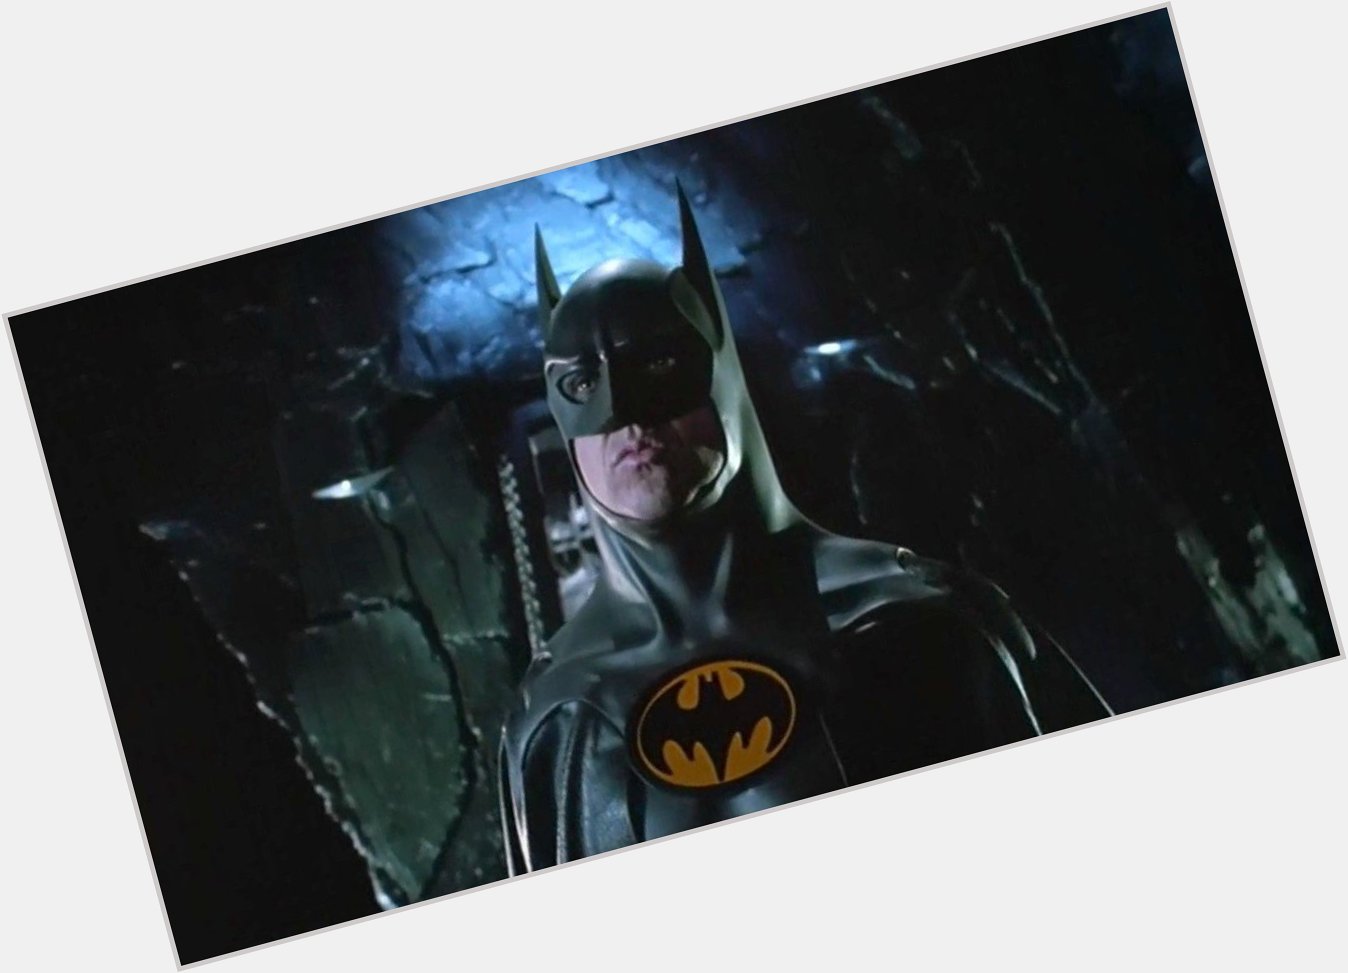 Happy Birthday to my personal favorite live-action Bruce Wayne/Batman Michael Keaton! 